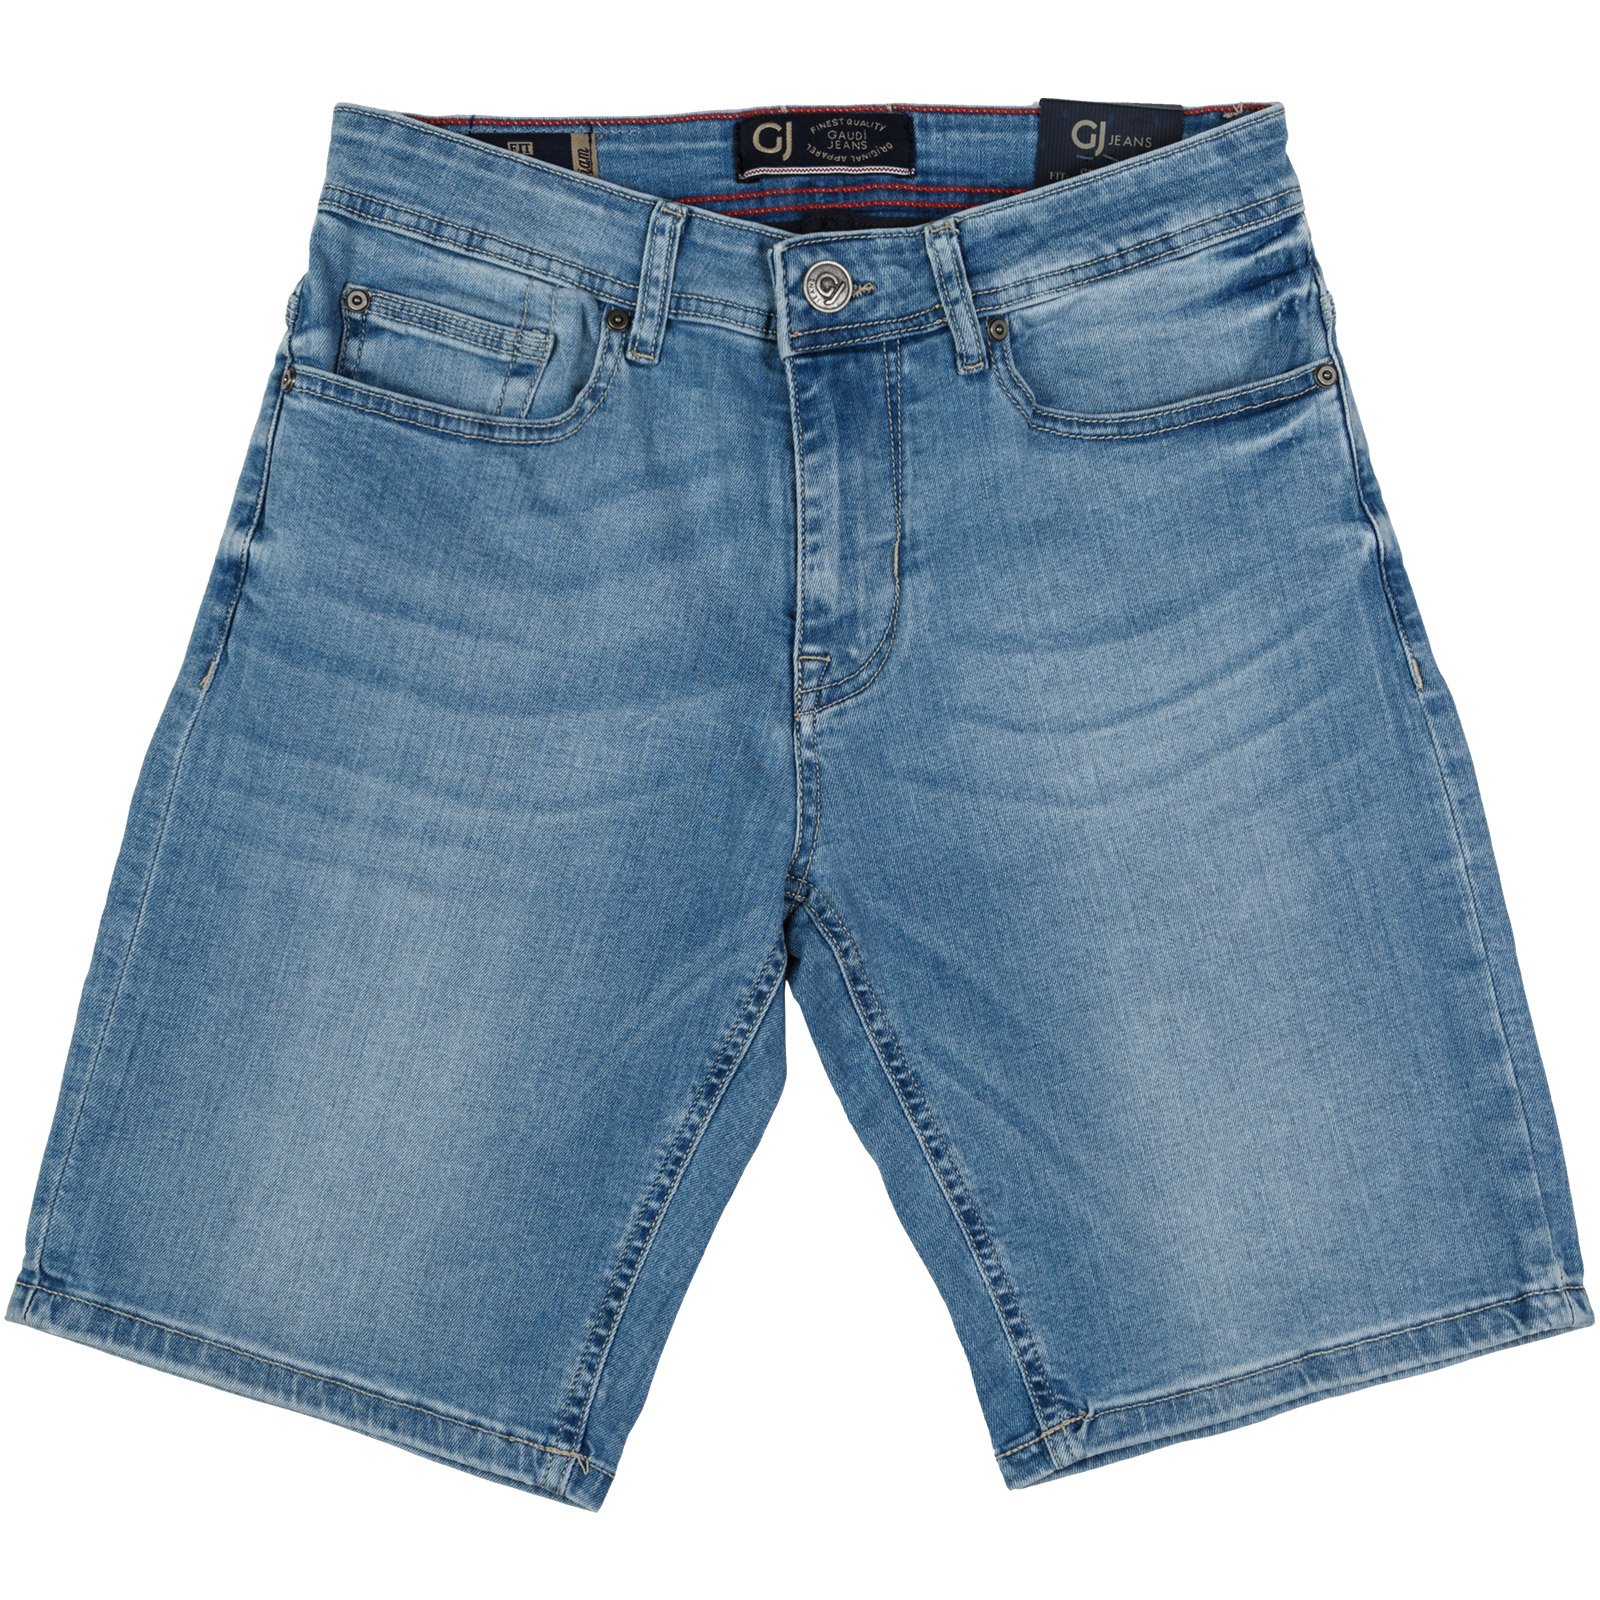 Liam Slim Fit Stretch Denim Shorts - Shorts : FA2 Online Outlet Store ...